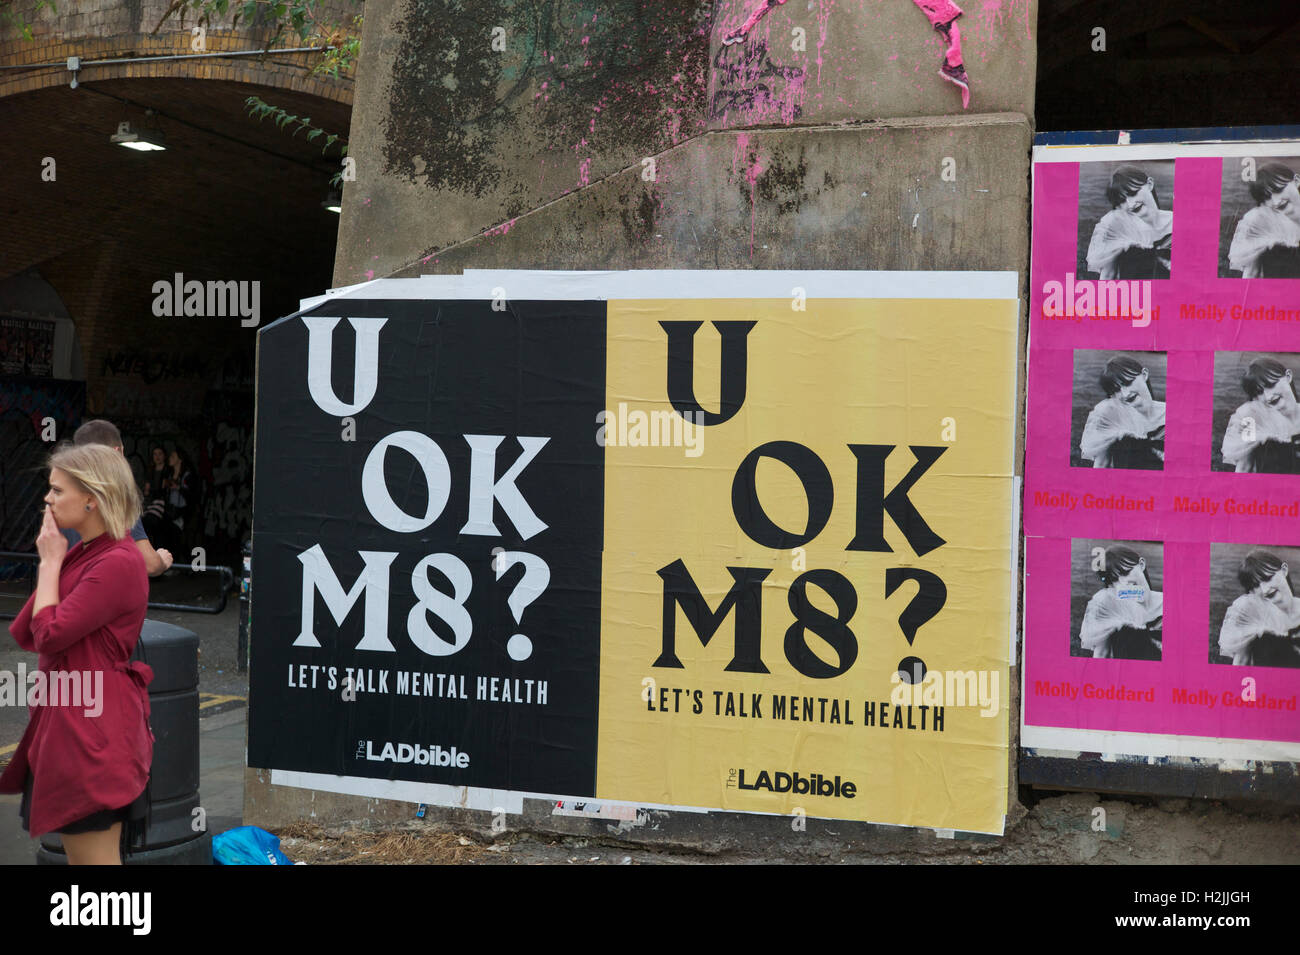 U OK M8? - You OK mate? Mental health awareness Stock Photo - Alamy